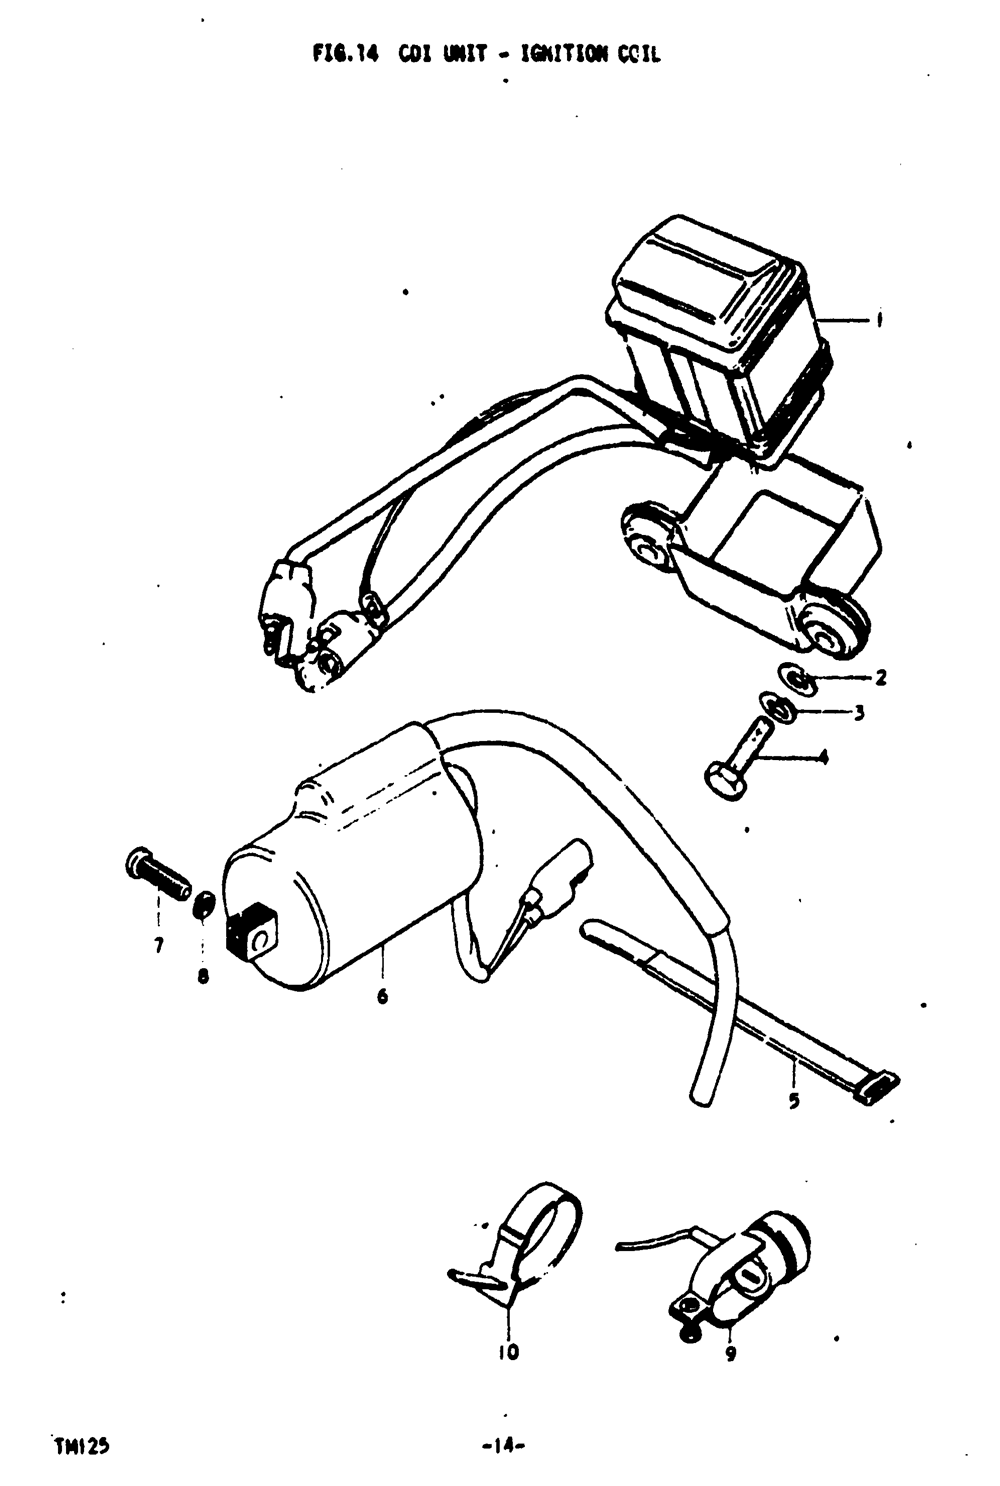 Cdi unit - ignition coil